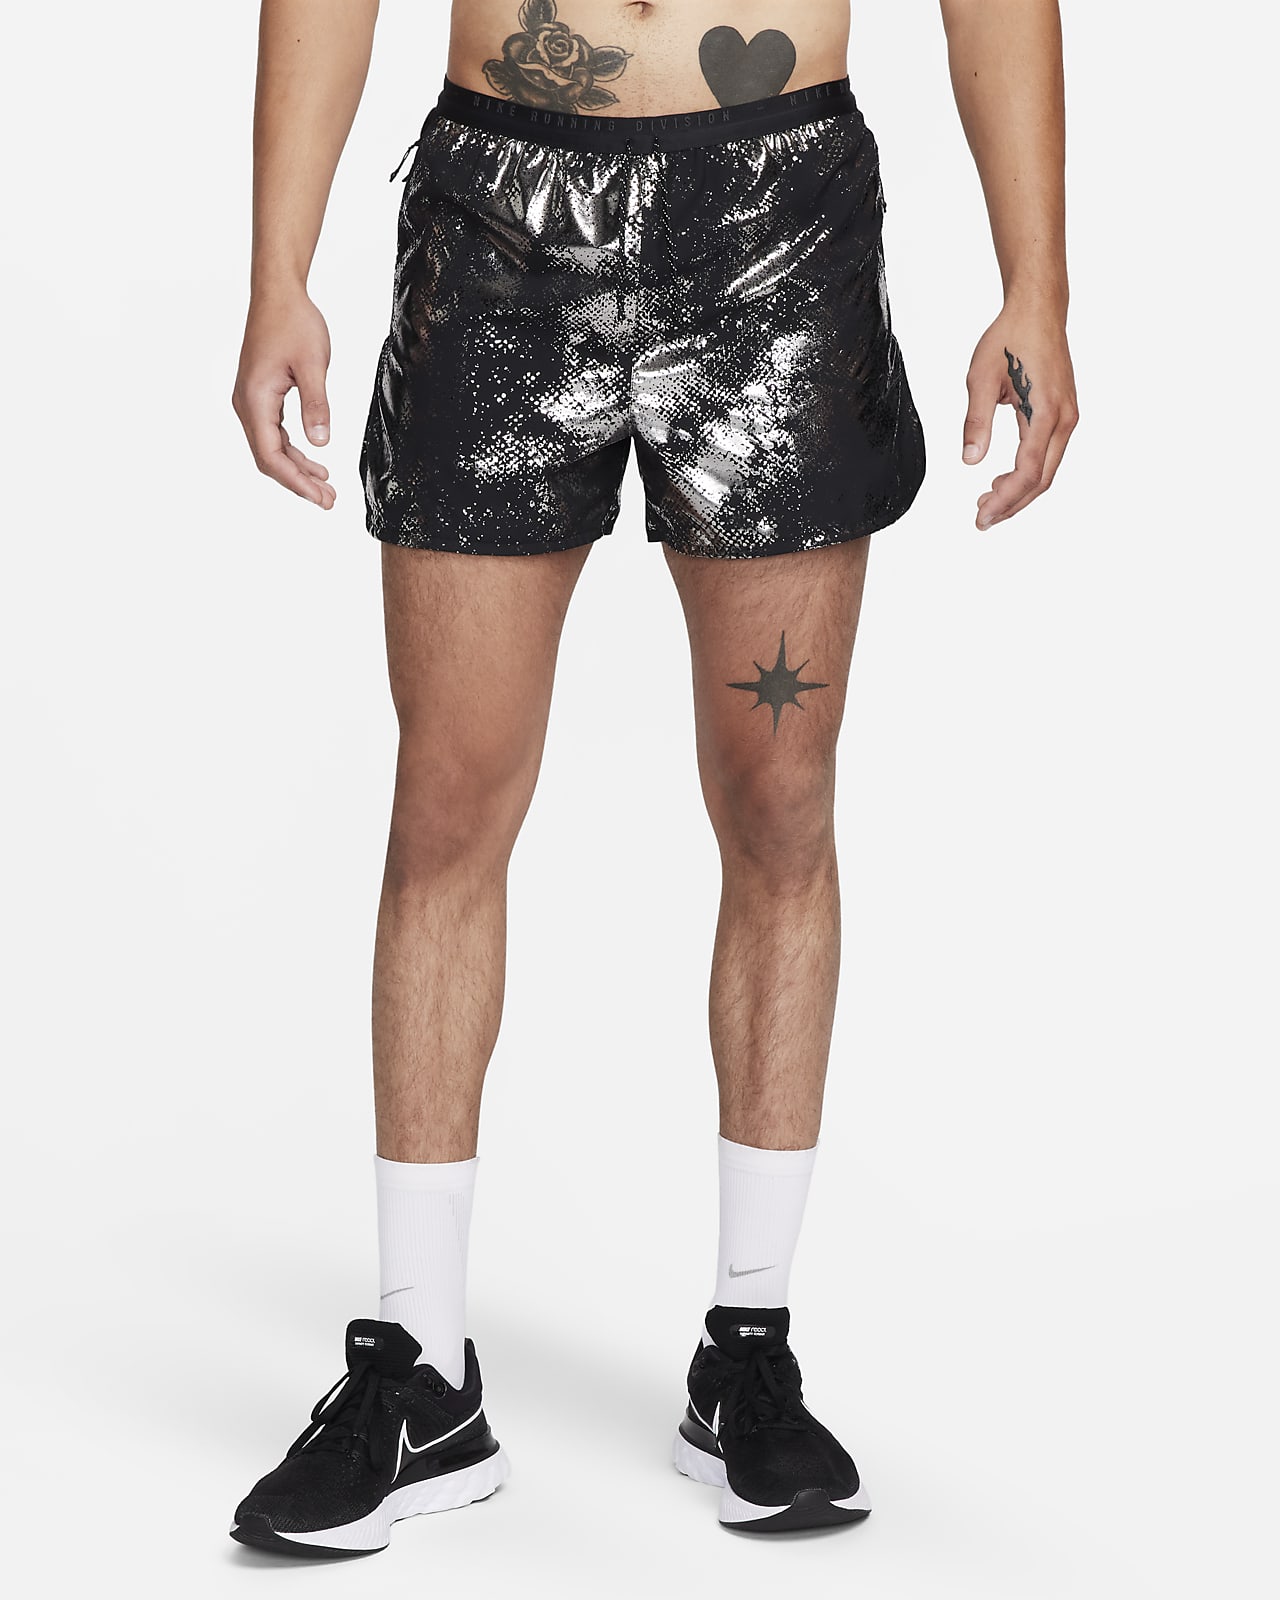 Nike Running Division Pantalons curts de running amb eslip incorporat de 10 cm Dri-FIT - Home